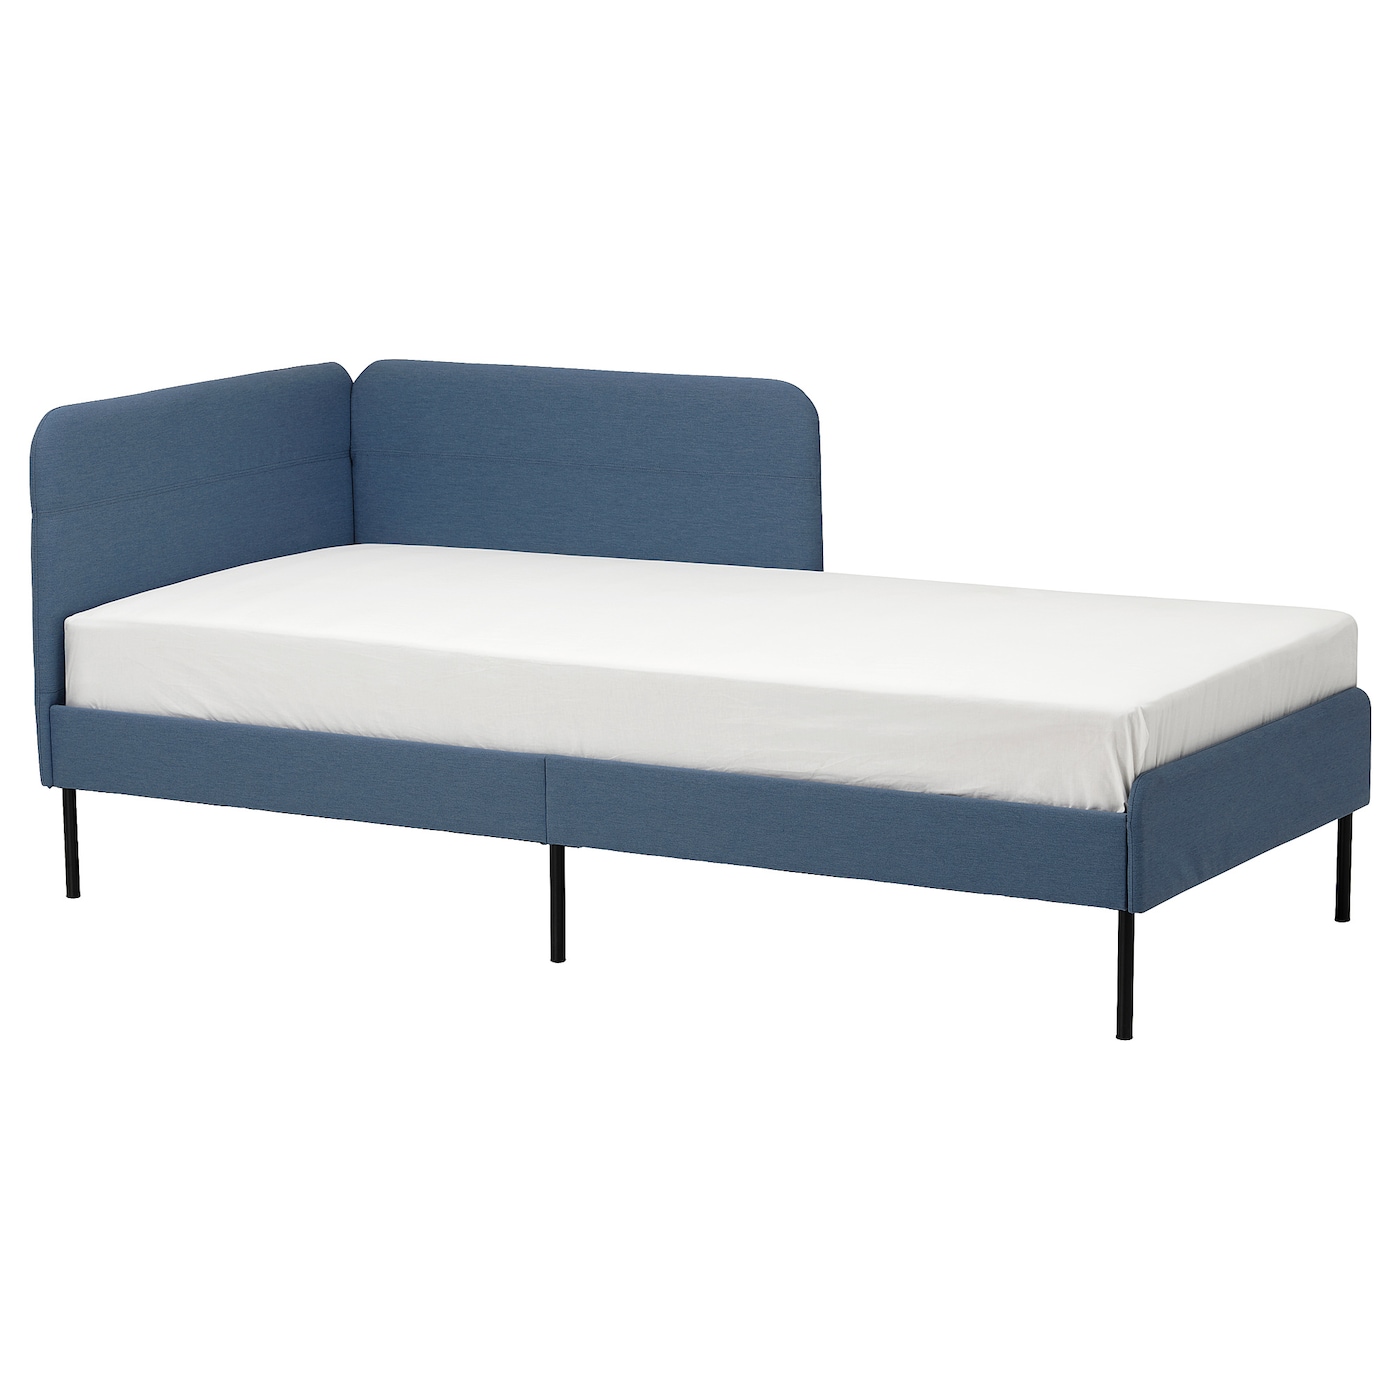 Каркас кровати с мягкой обивкой - IKEA BLÅKULLEN/BLAKULLEN, 200х90 см, синий, БЛОКУЛЛЕН ИКЕА